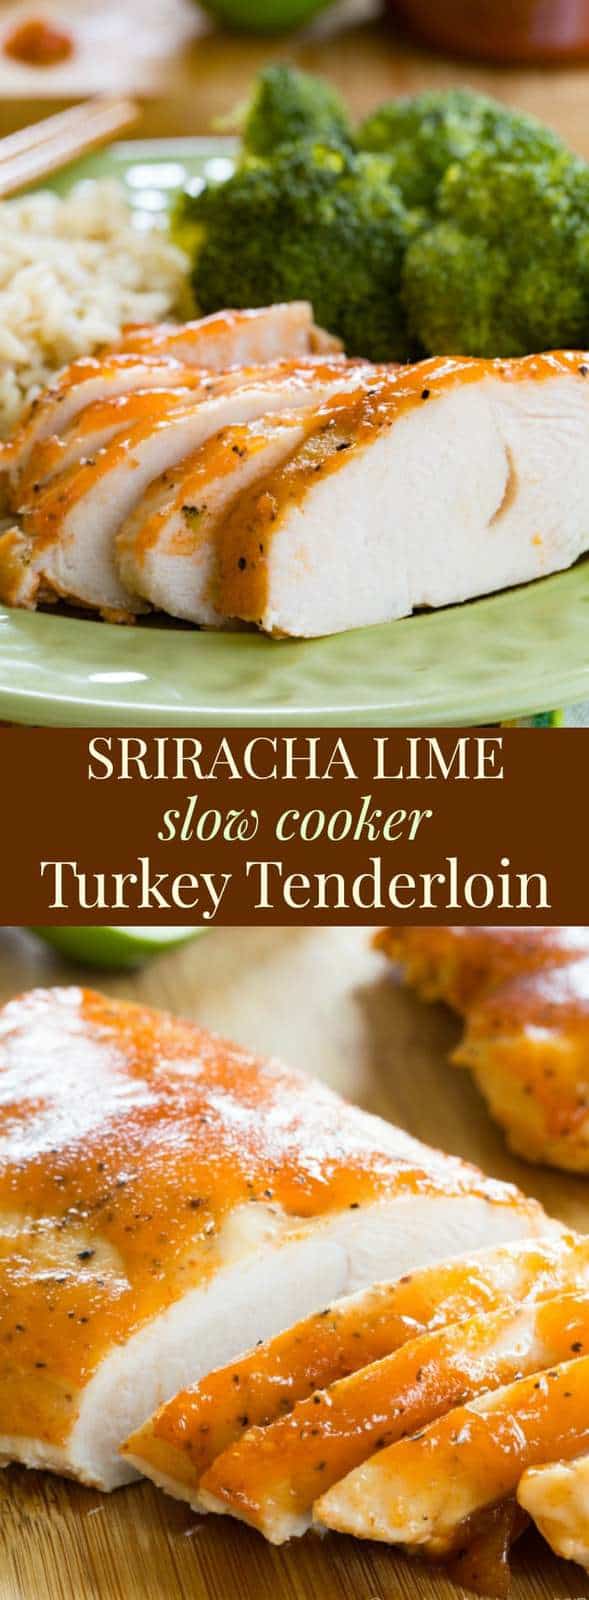 Sriracha Lime Slow Cooker Turkey Tenderloin - Cupcakes ... - 589 x 1600 jpeg 68kB